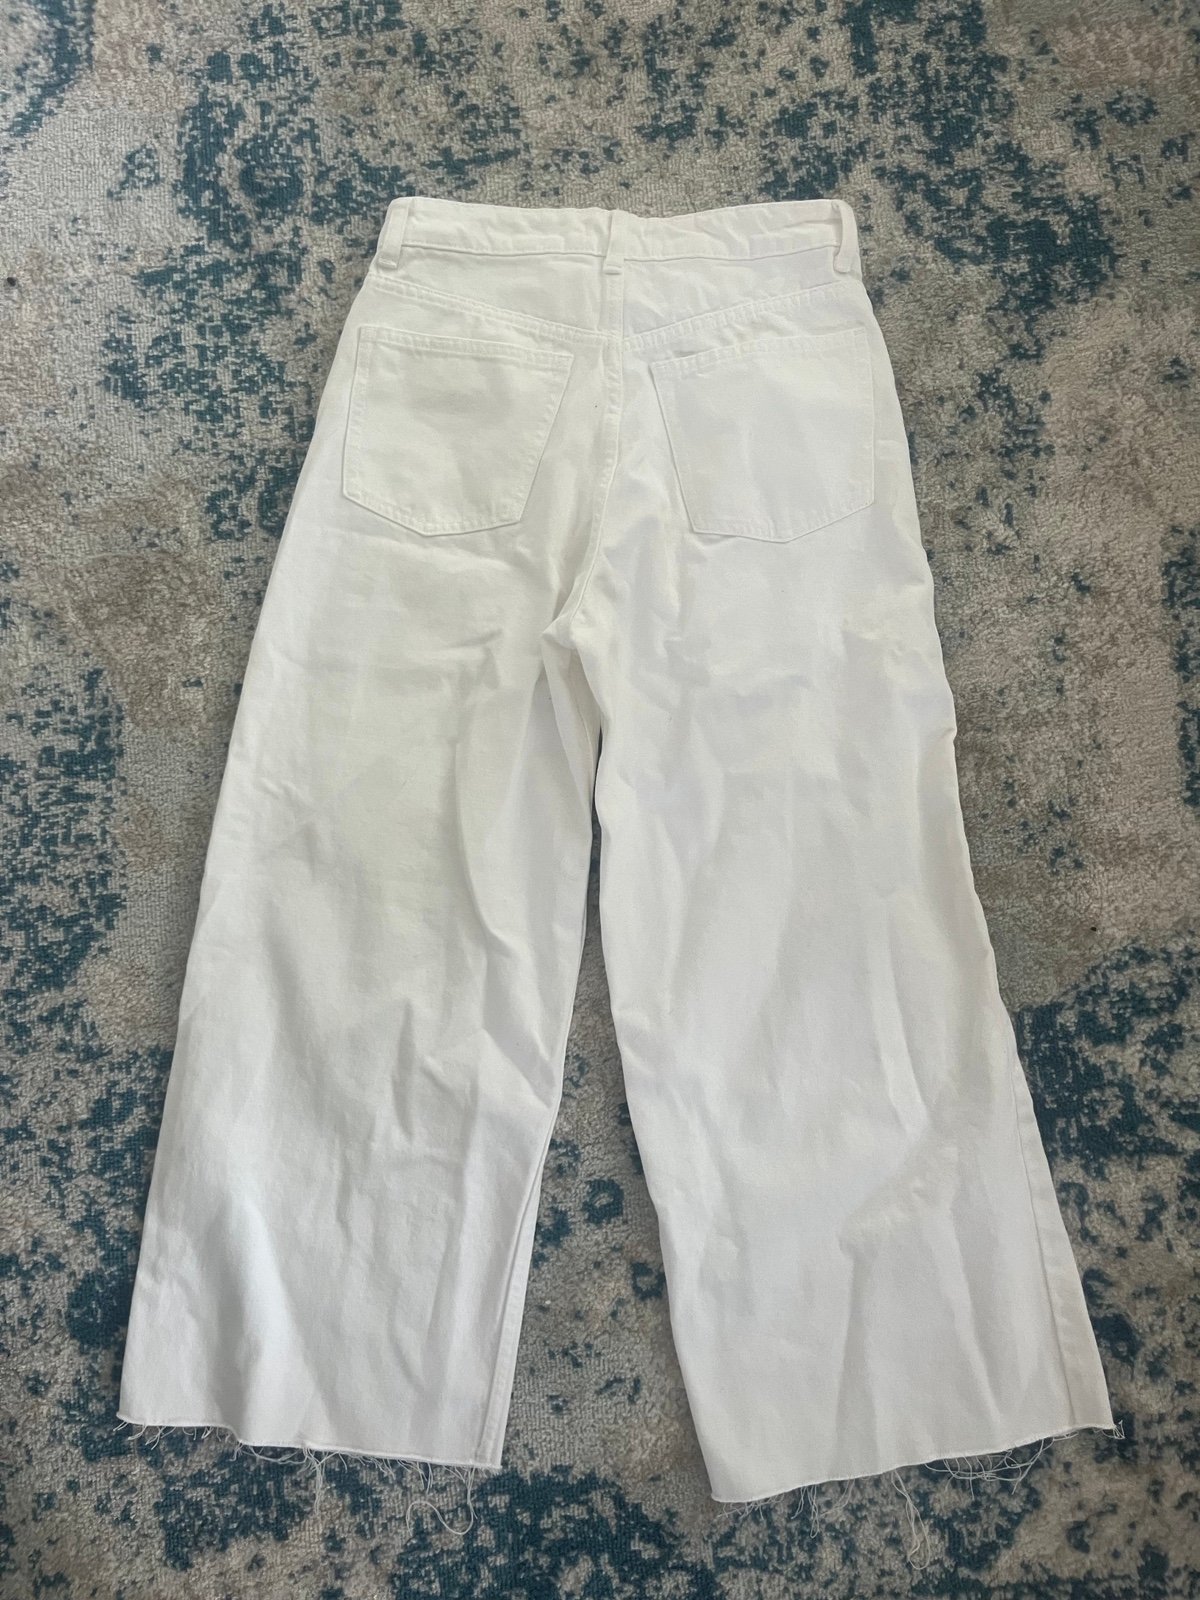 Cheap white ZARA jeans J17ajB1yn New Style